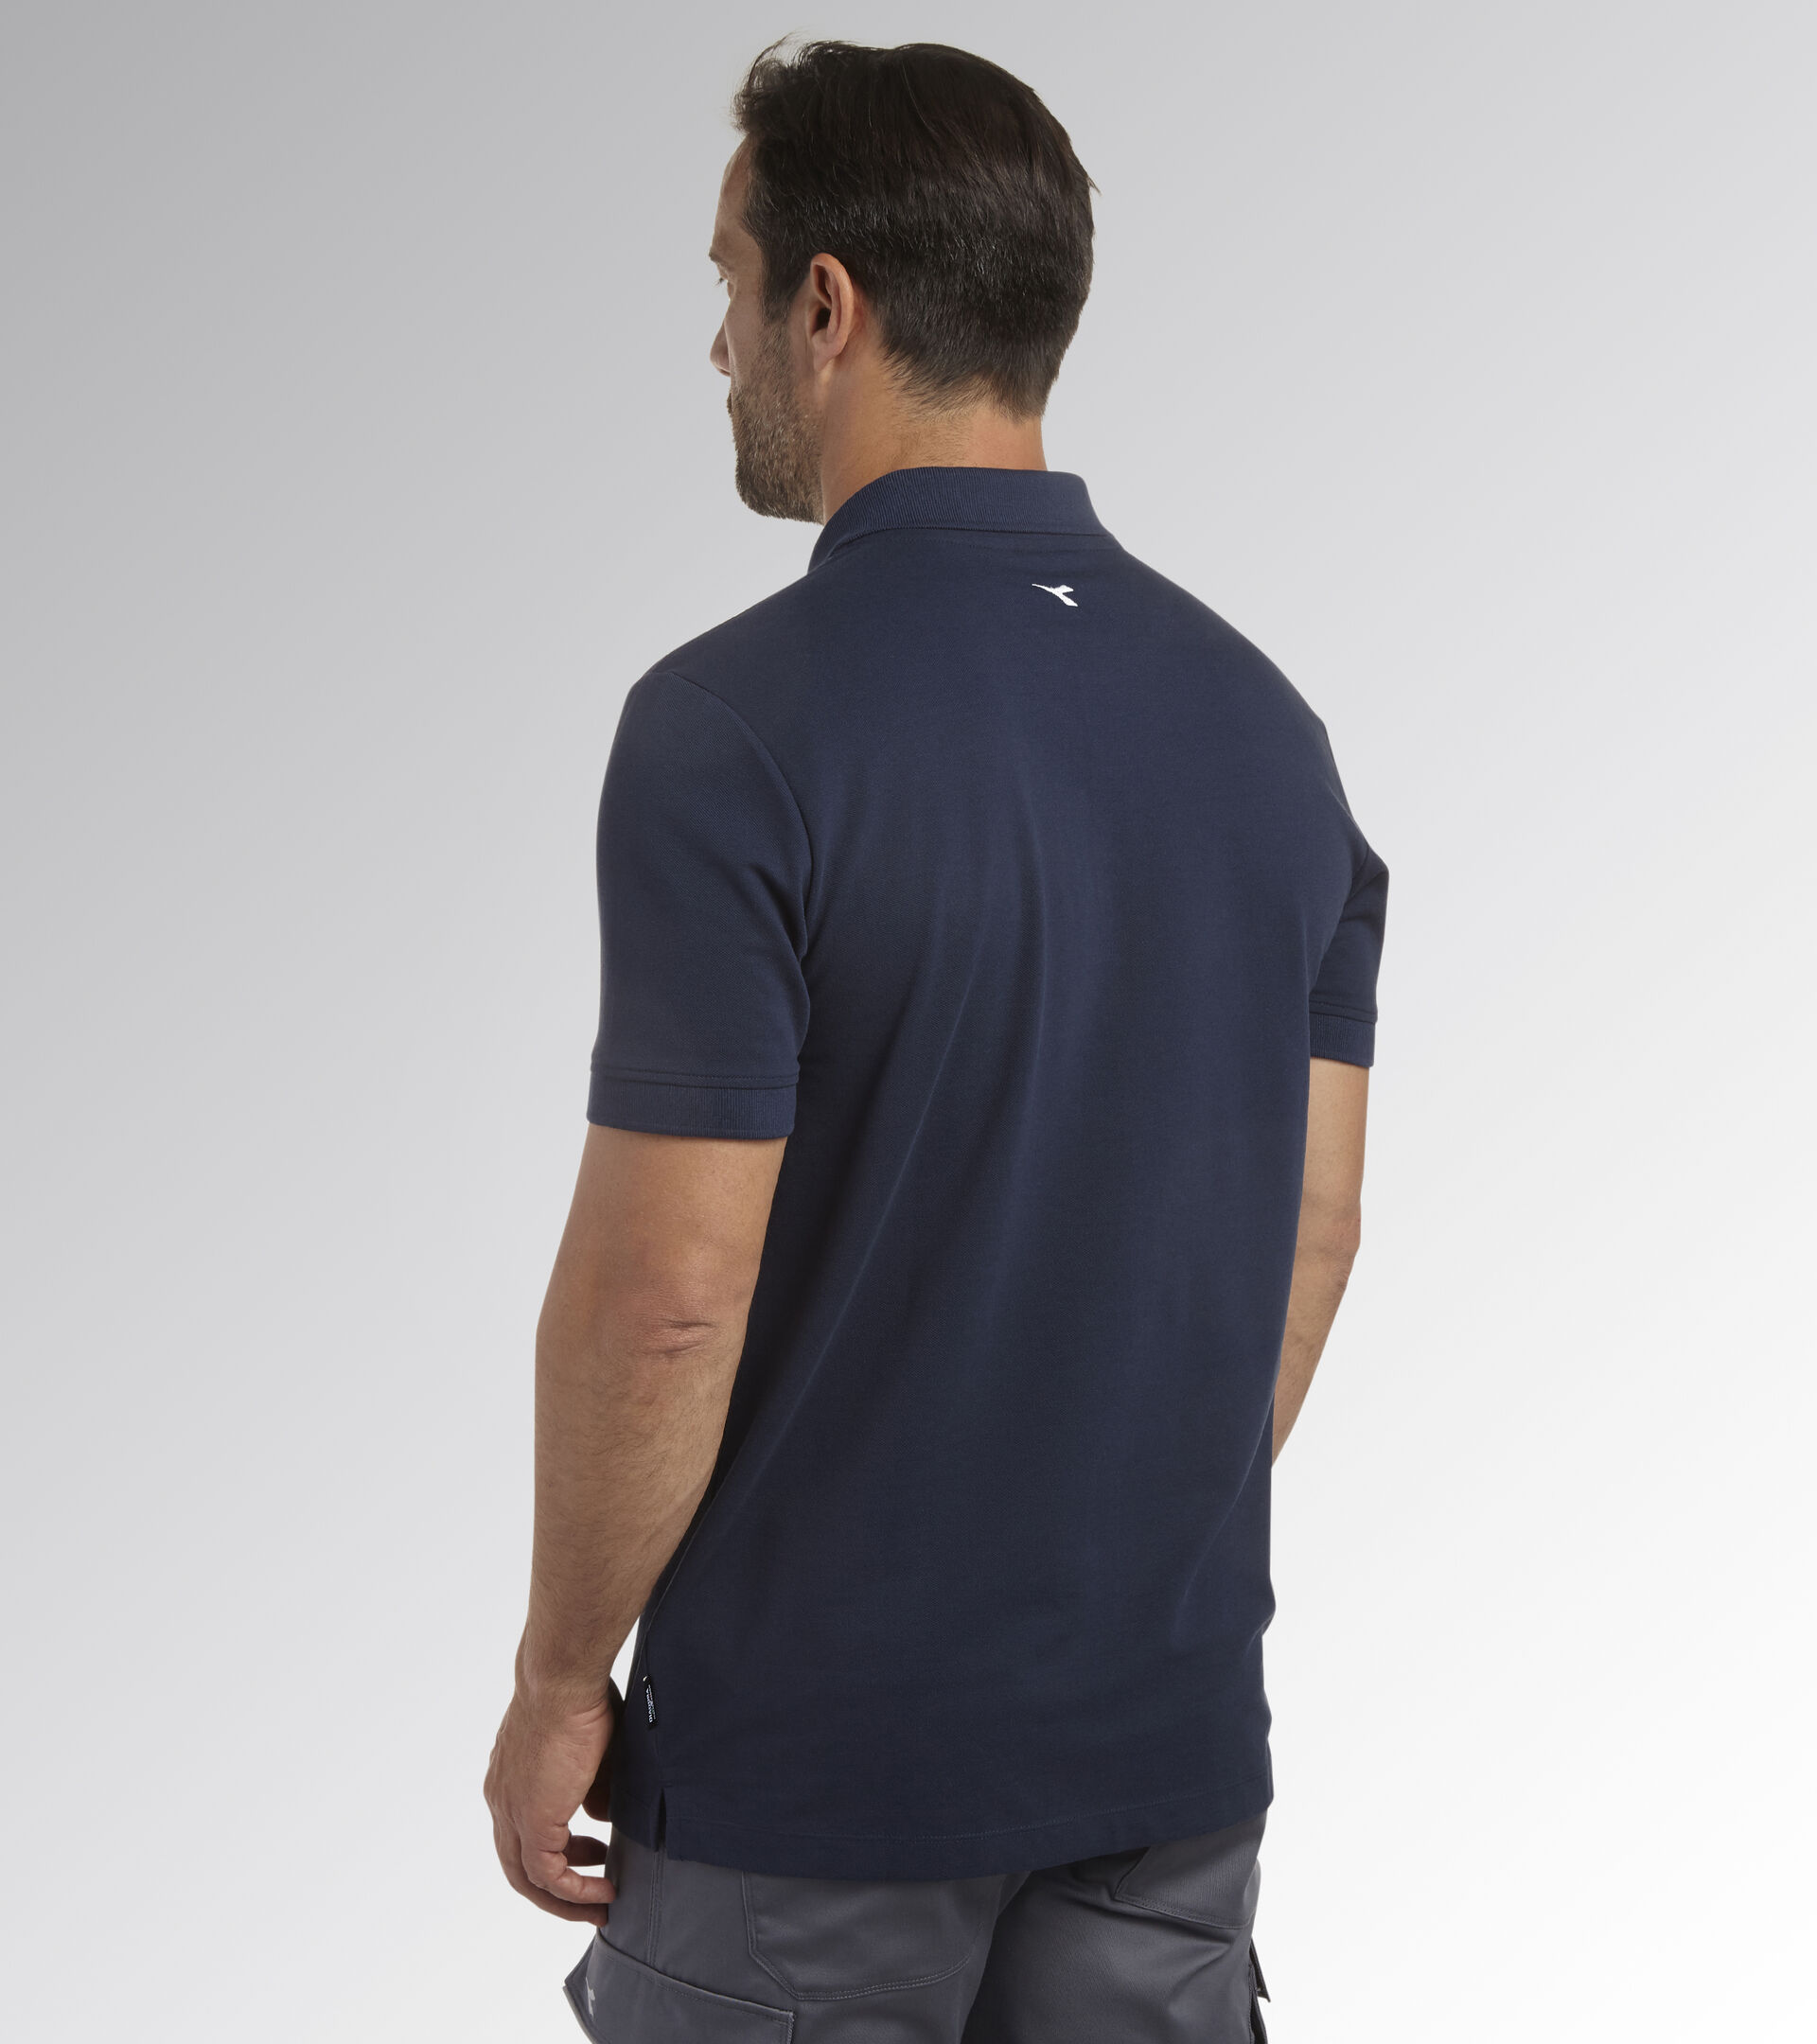 Short-sleeved work polo shirt POLO MC INDUSTRY CLASSIC NAVY - Utility